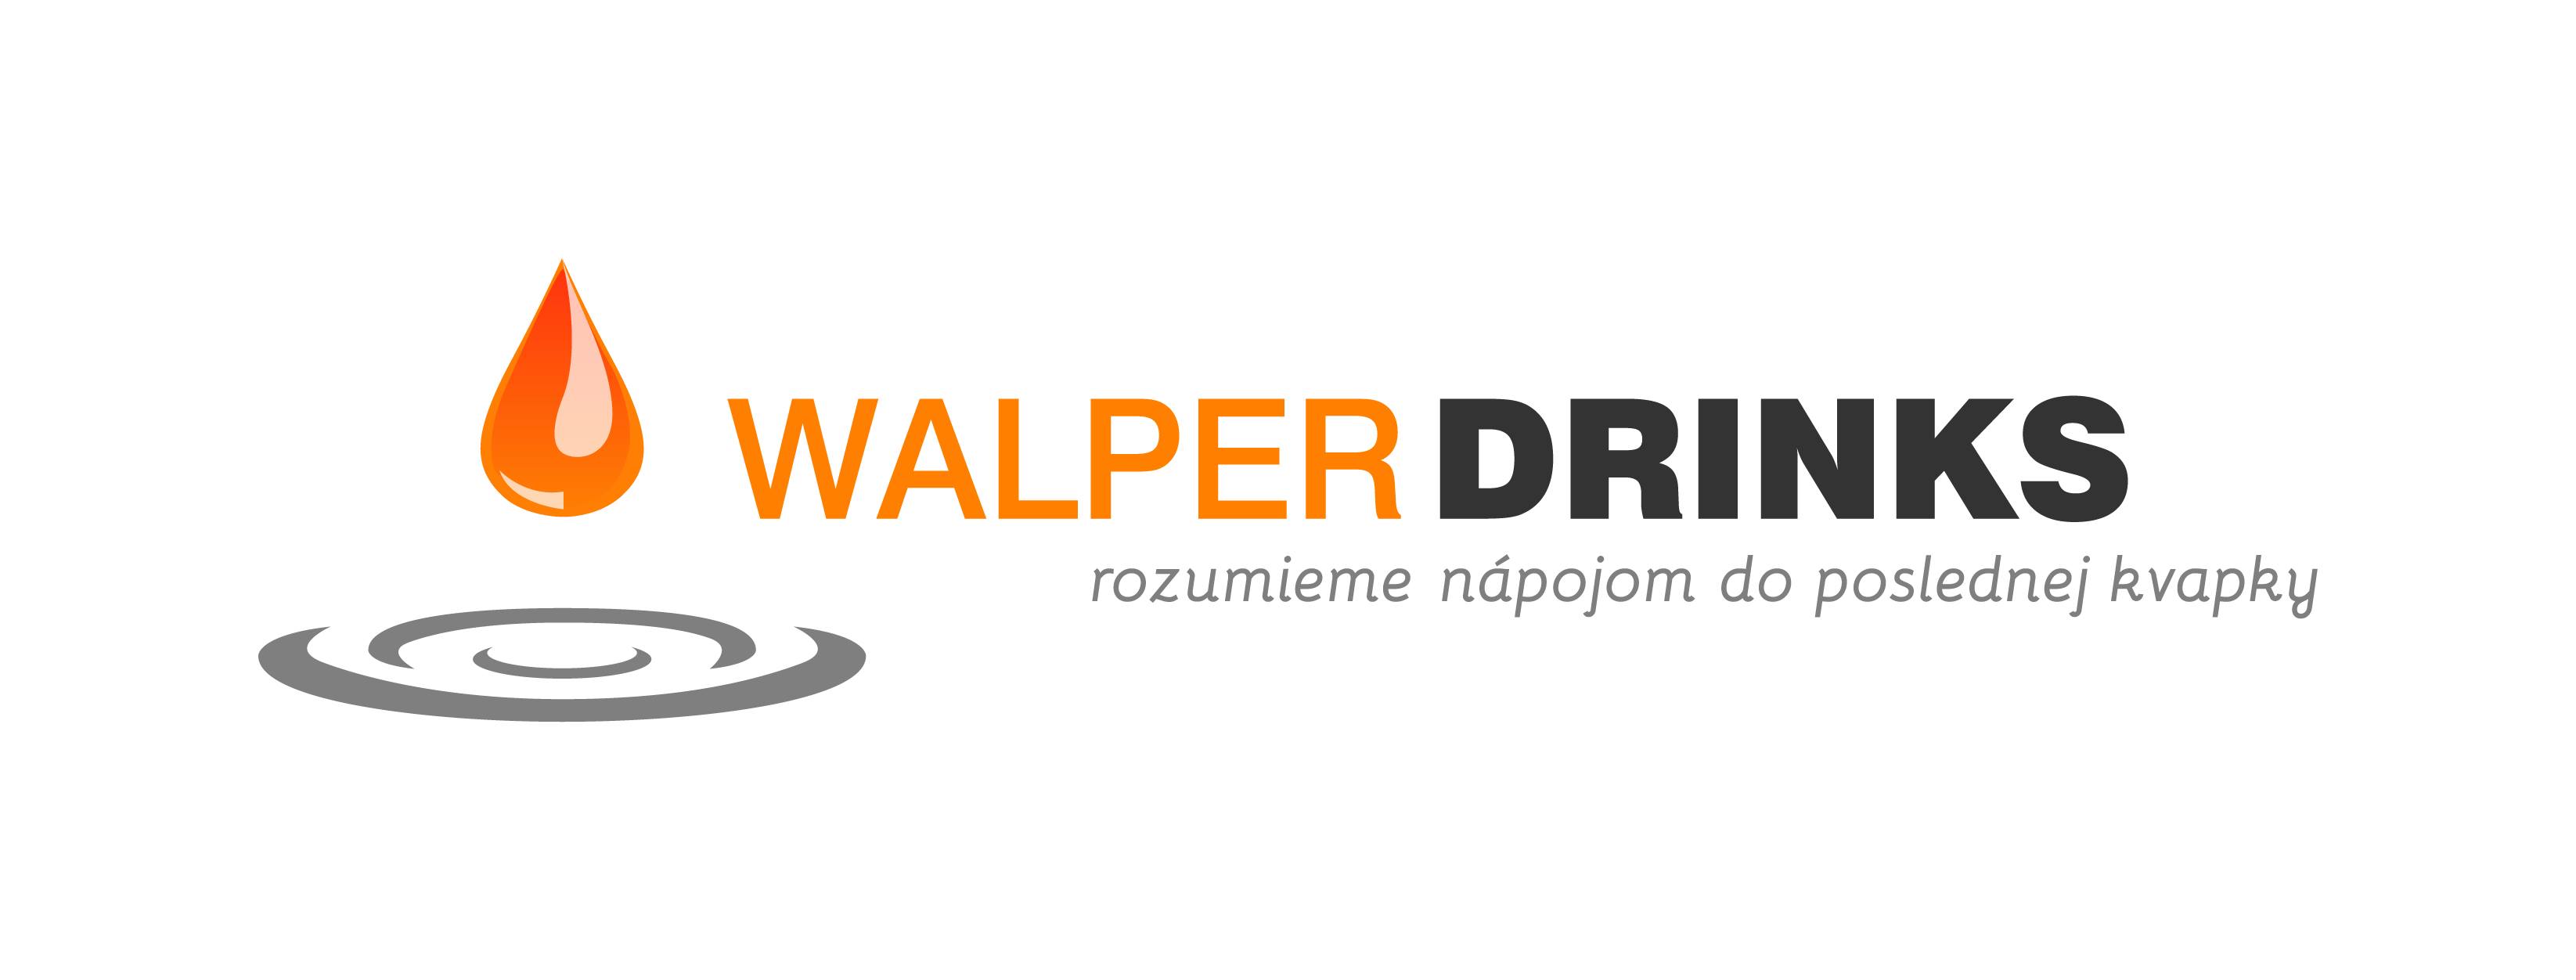 WALPER DRINKS